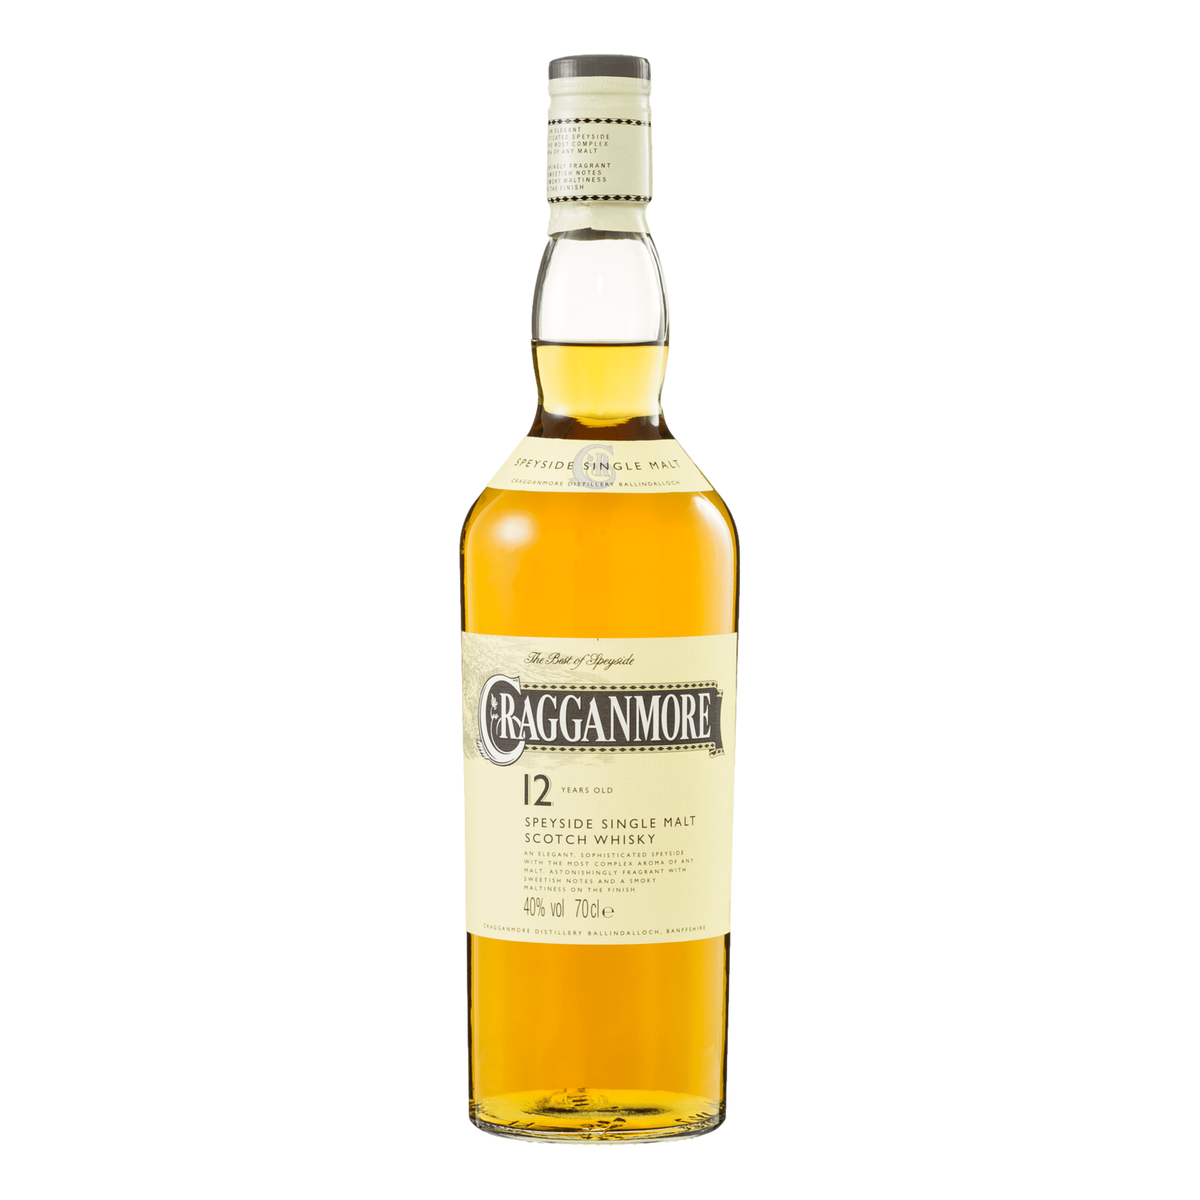 Cragganmore Speyside Single Malt Scotch Whisky 12YO 700ml